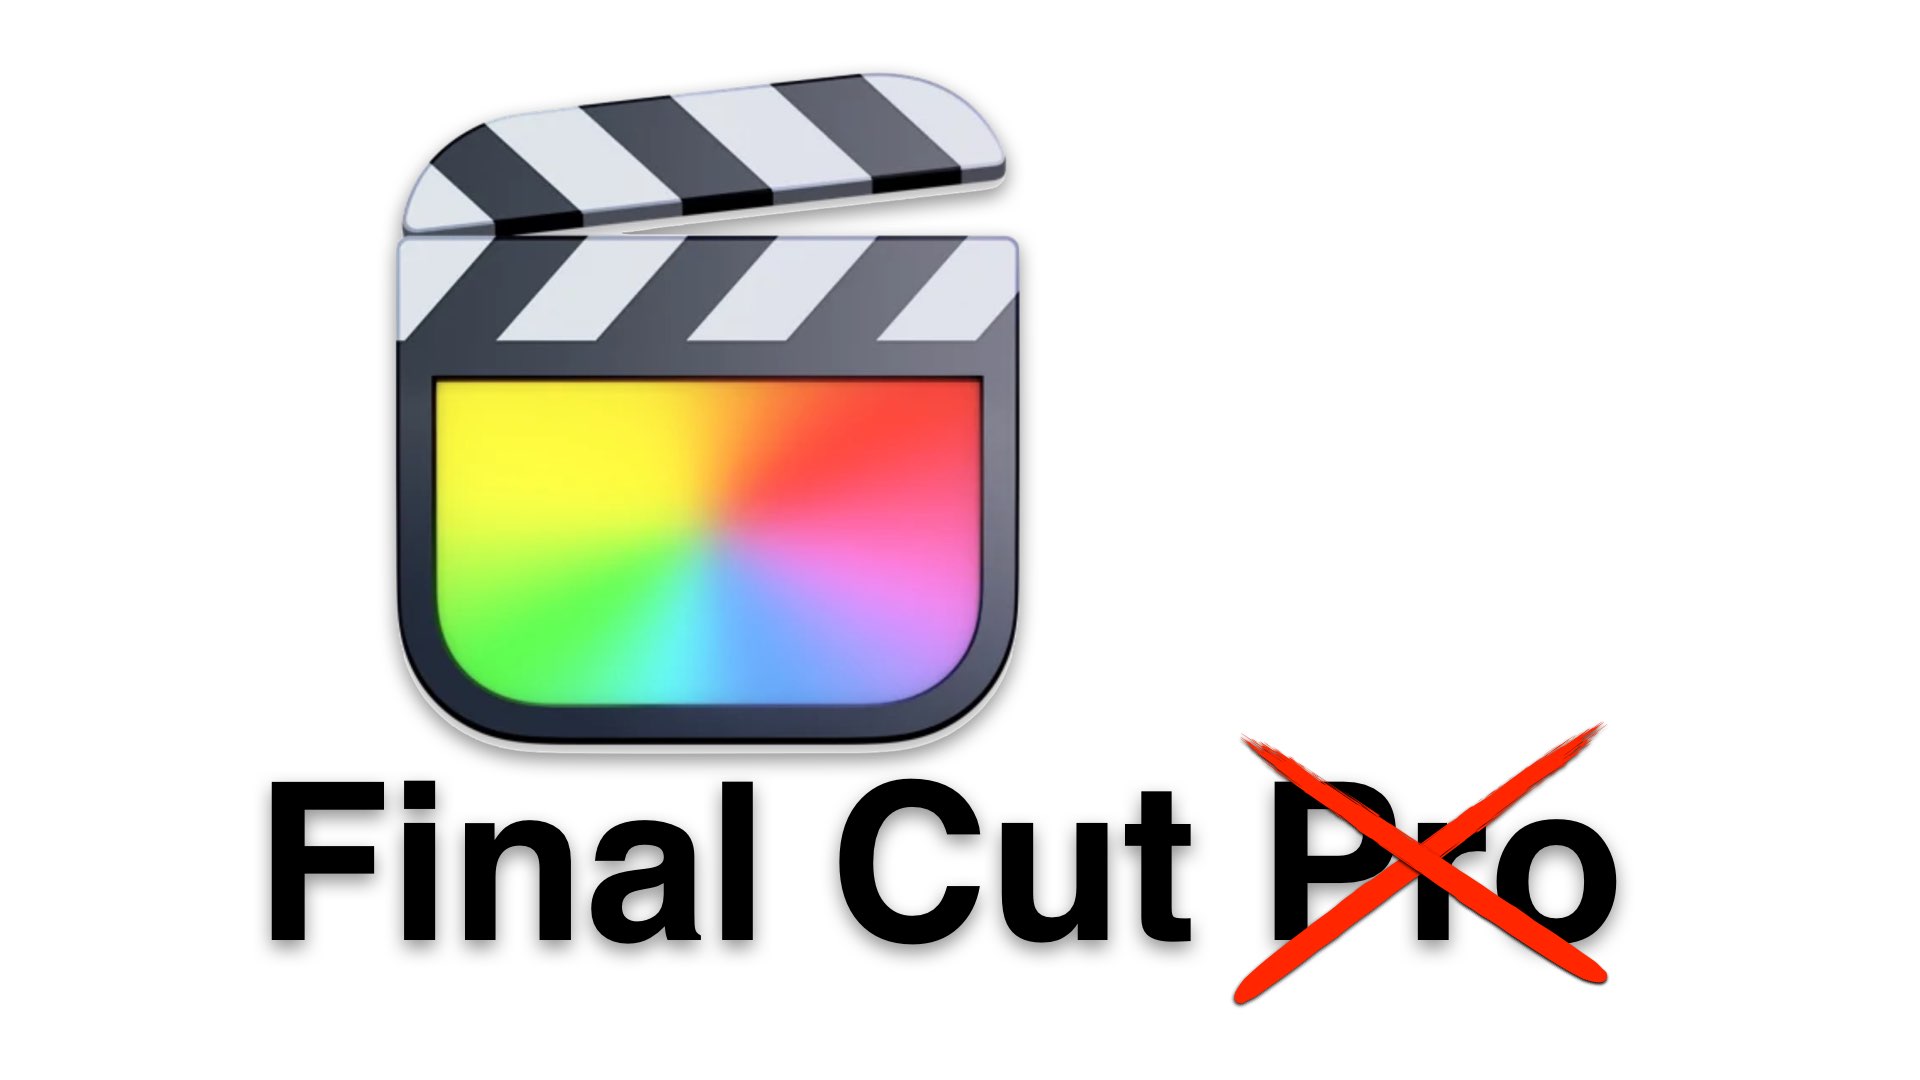 Apple Mac Mini M2: Good Enough for Professional Video Editing? - Y.M.Cinema  Magazine